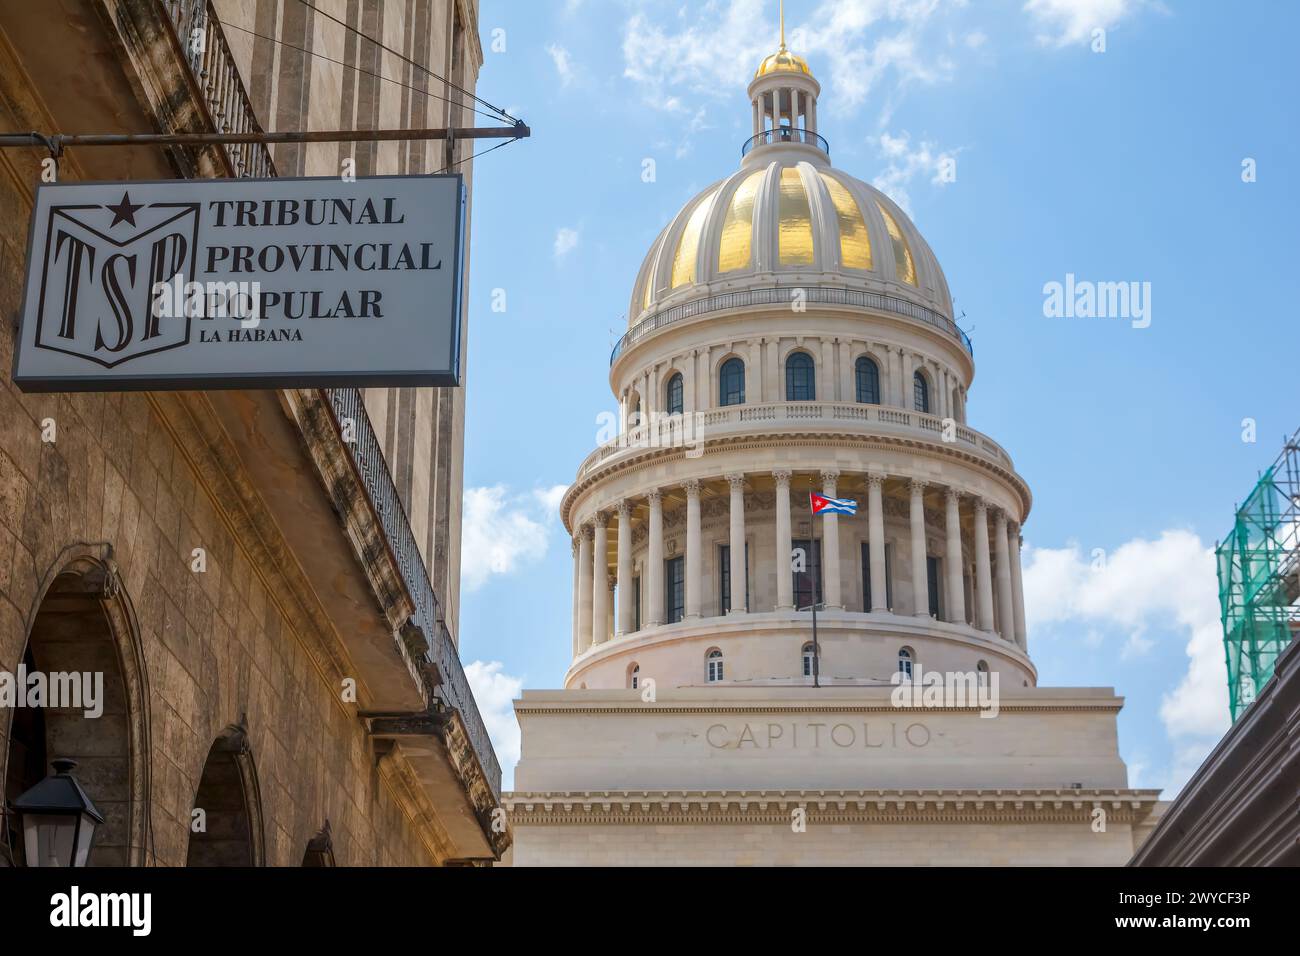 Dome of Capitolio building, sign Tribunal Provincial Popular in Havana, Cuba Stock Photo